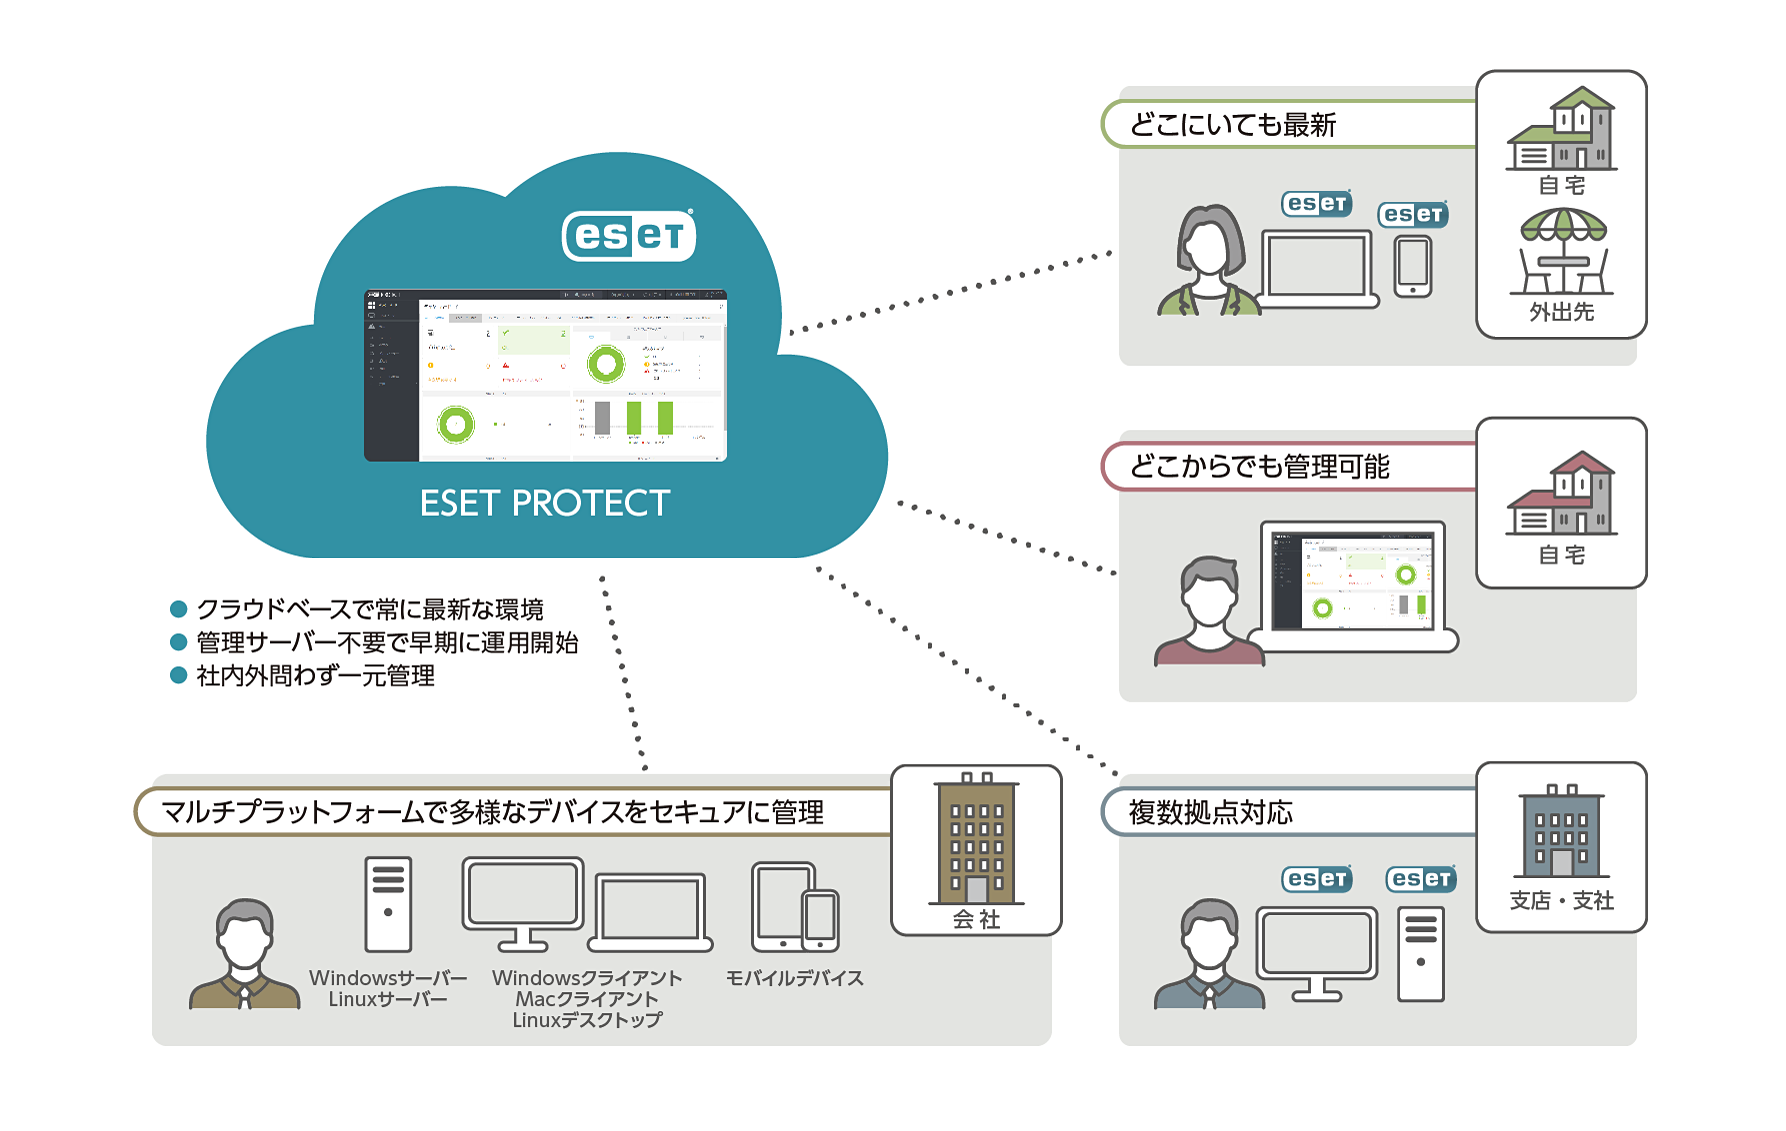 ESET PROTECT Cloud 構成図